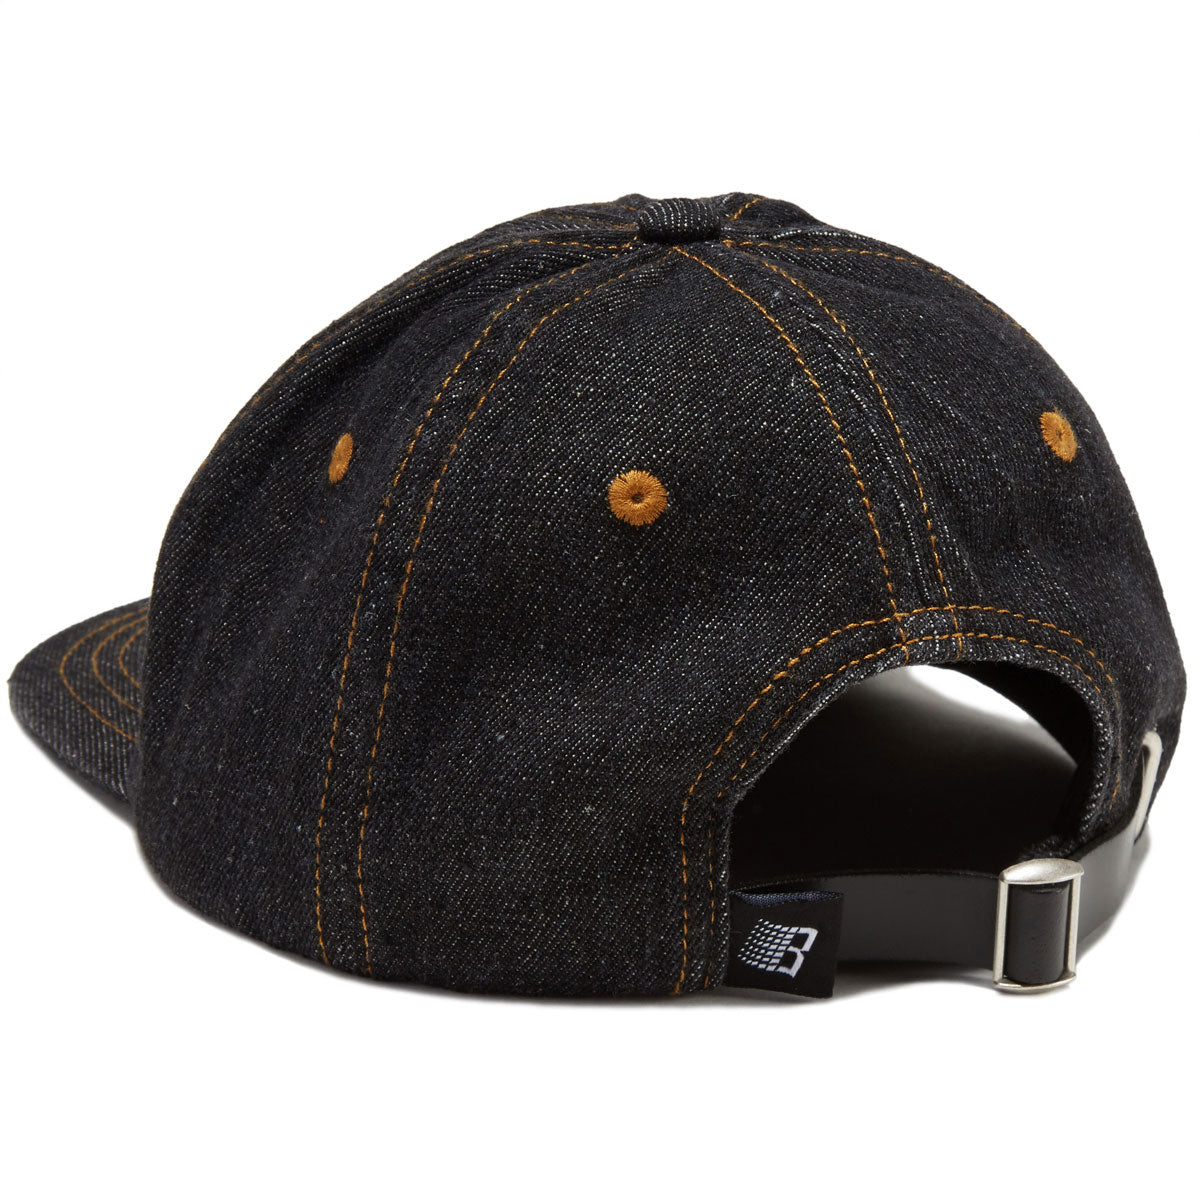 Bronze 56k Xlb Denim Hat - Black image 2